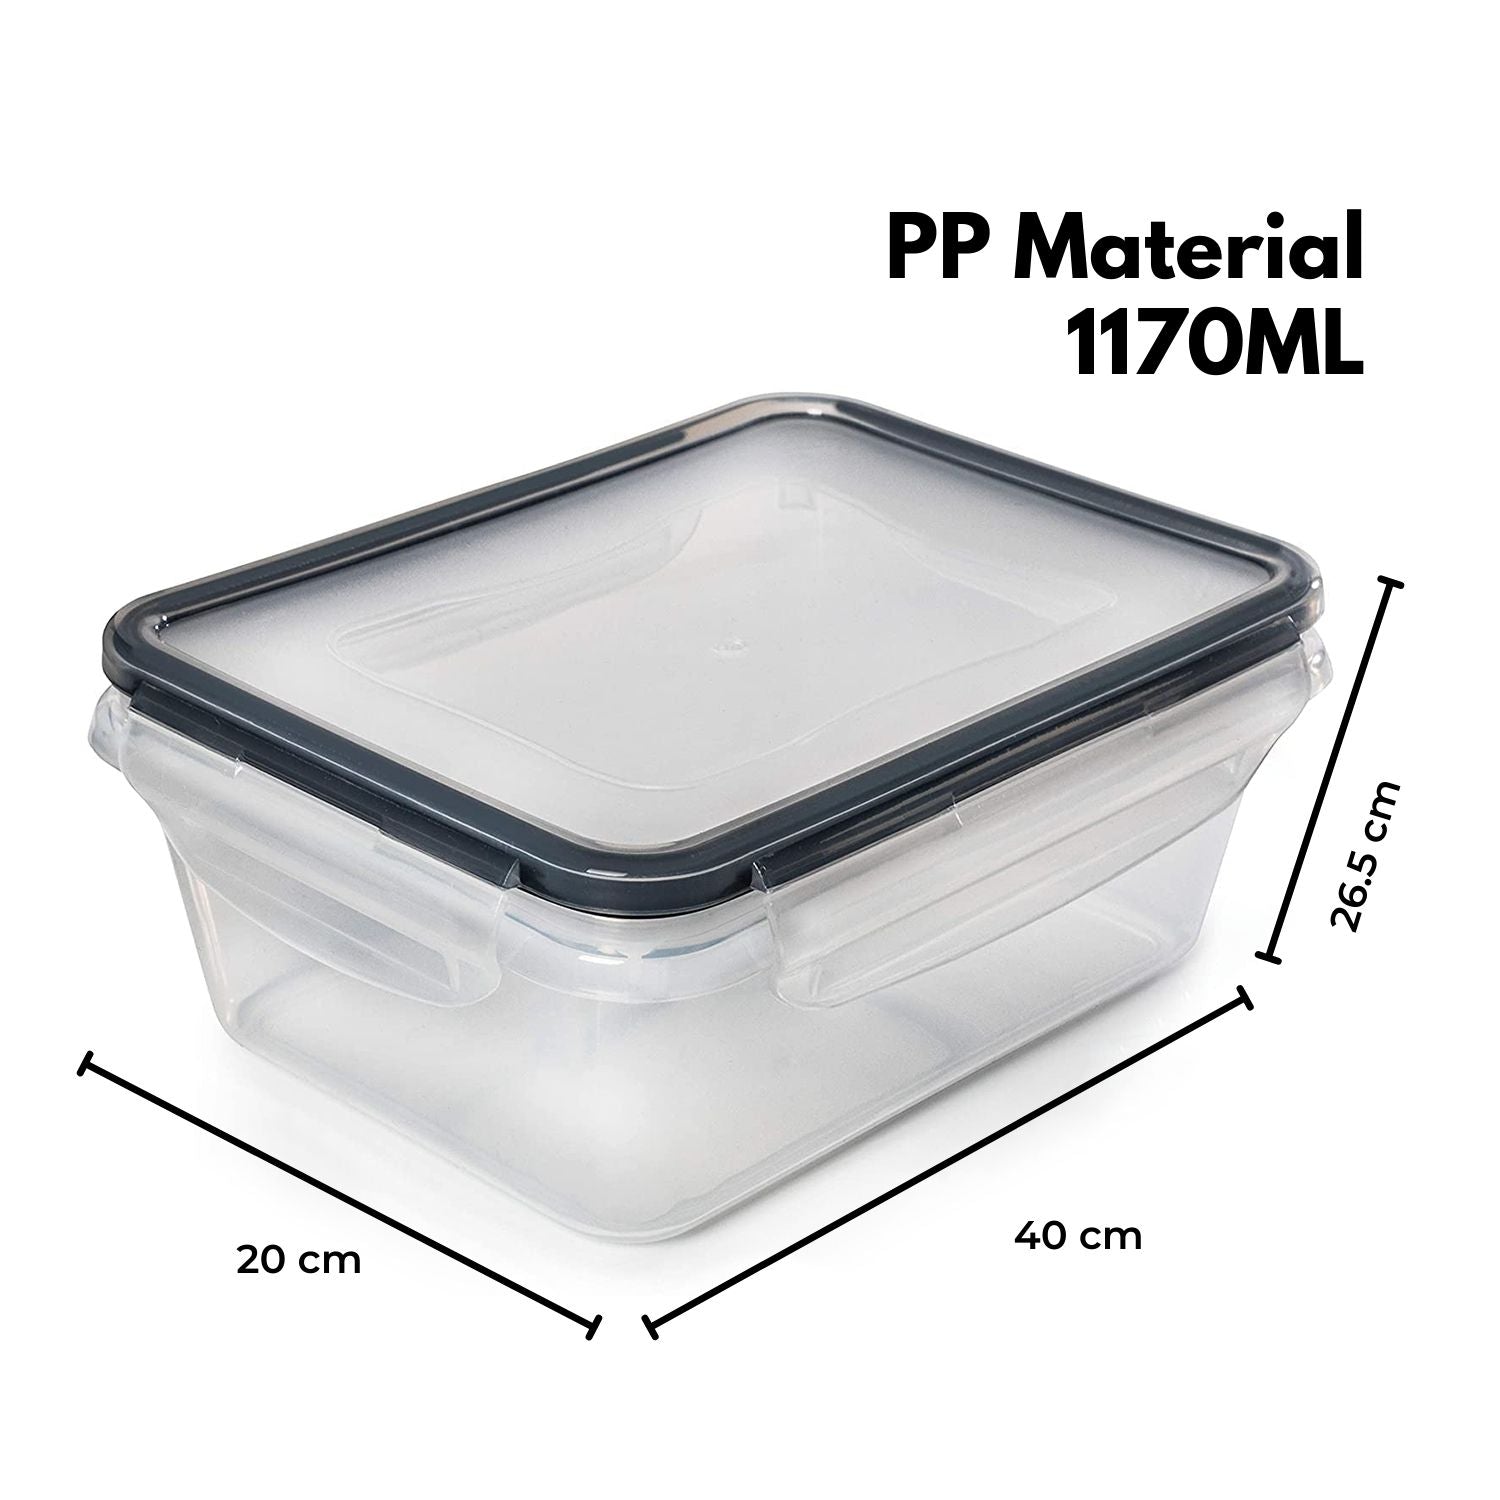 GOMINIMO 10 Pack Rectangular Airtight Food Storage Container Set (Transparent and Black)